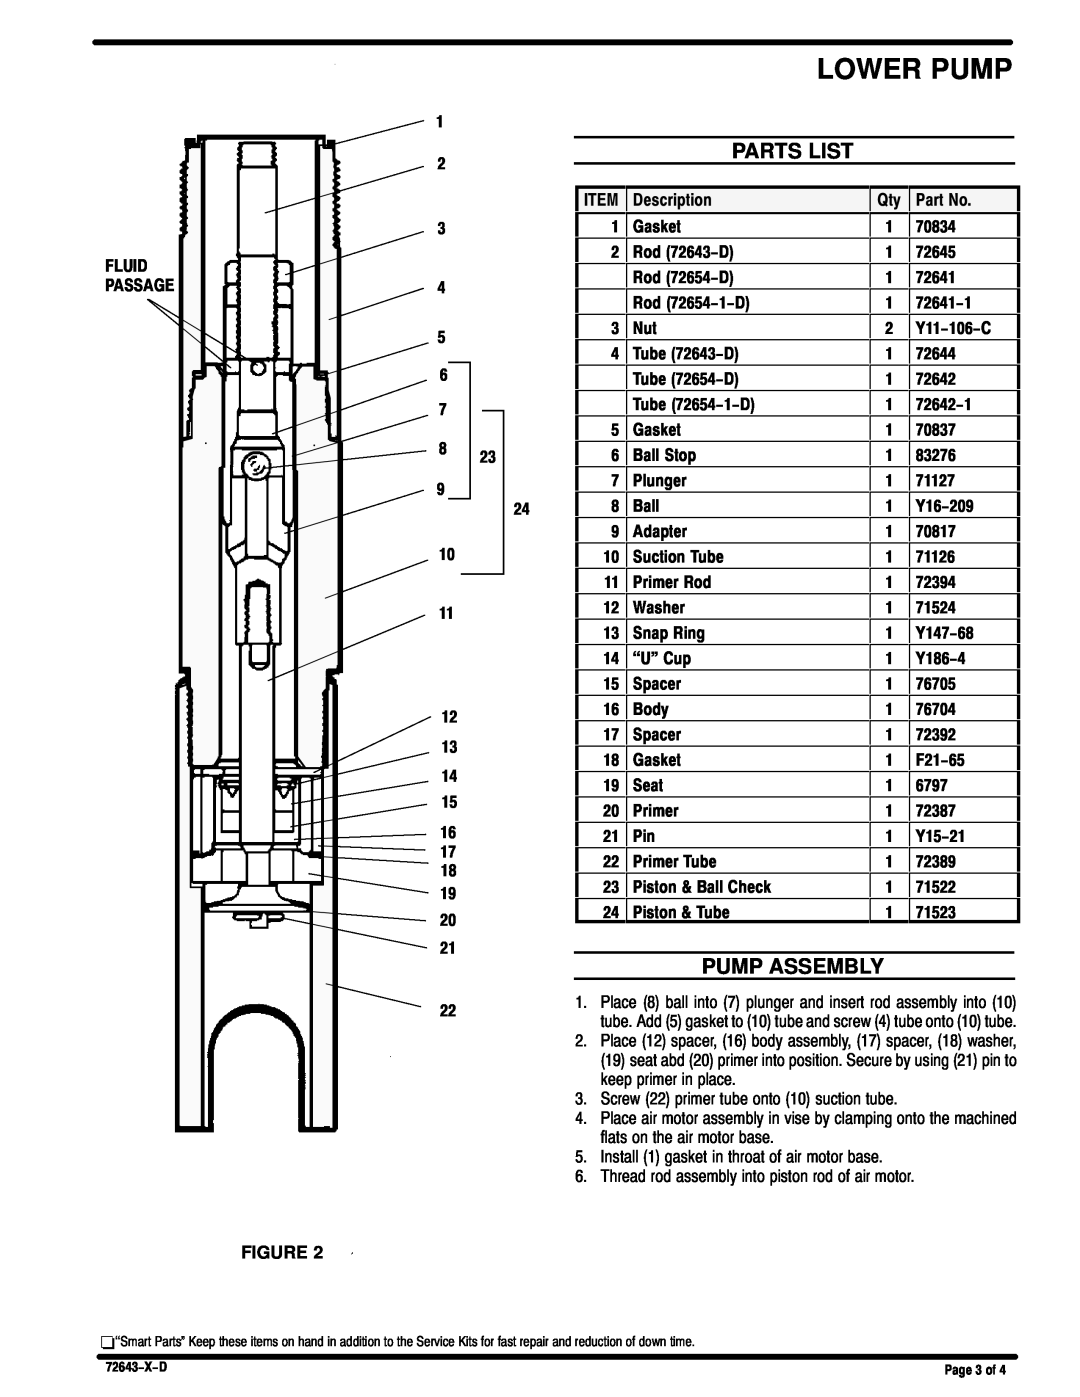 Ingersoll-Rand 72643D, 72654XD manual Parts List, Pump Assembly, Lower Pump 